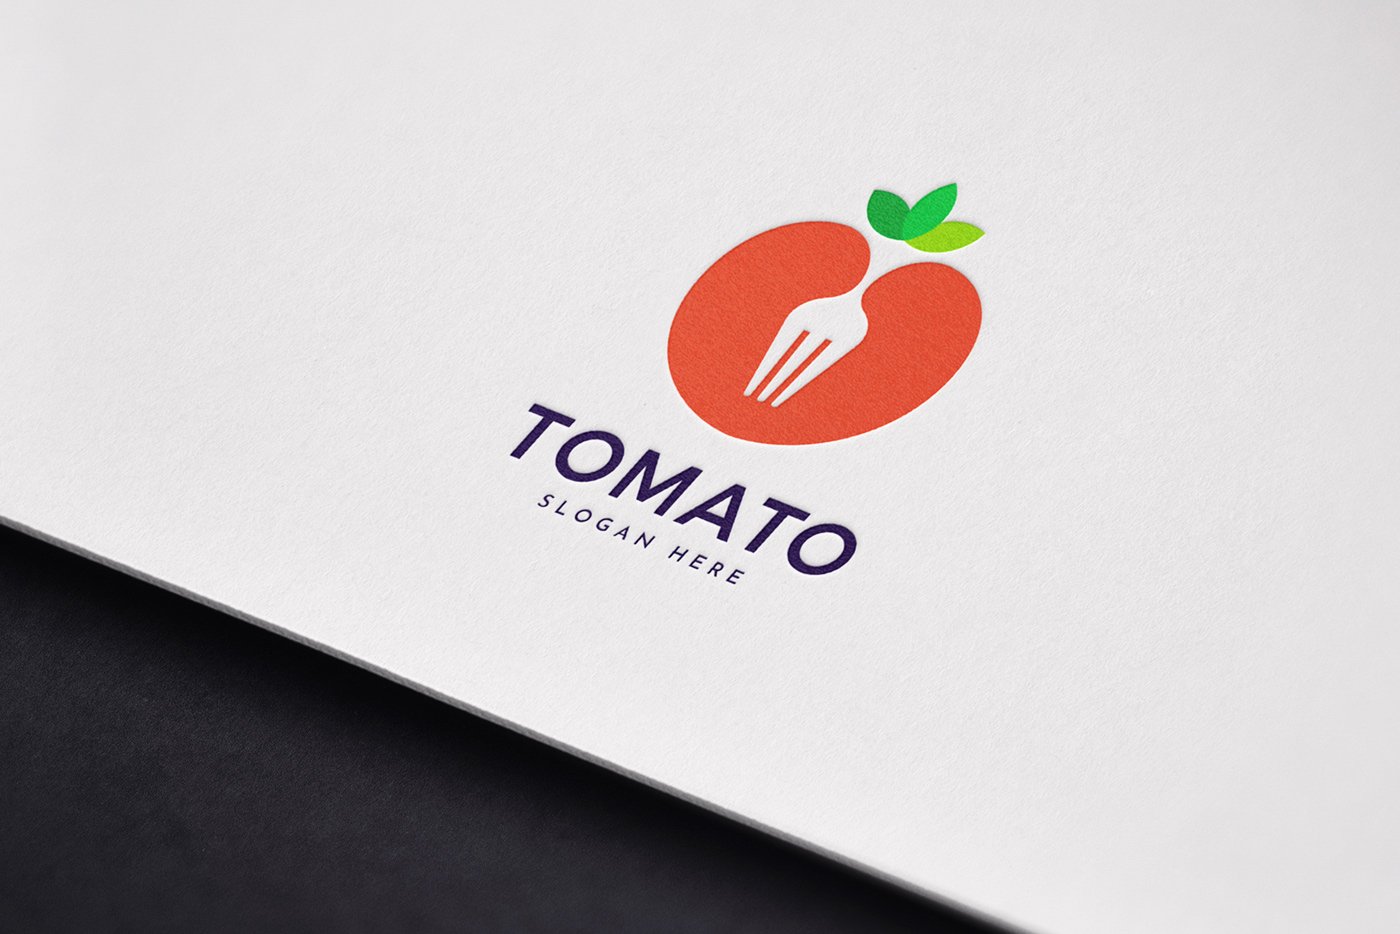 Tomato & Fork Logo Template cover image.